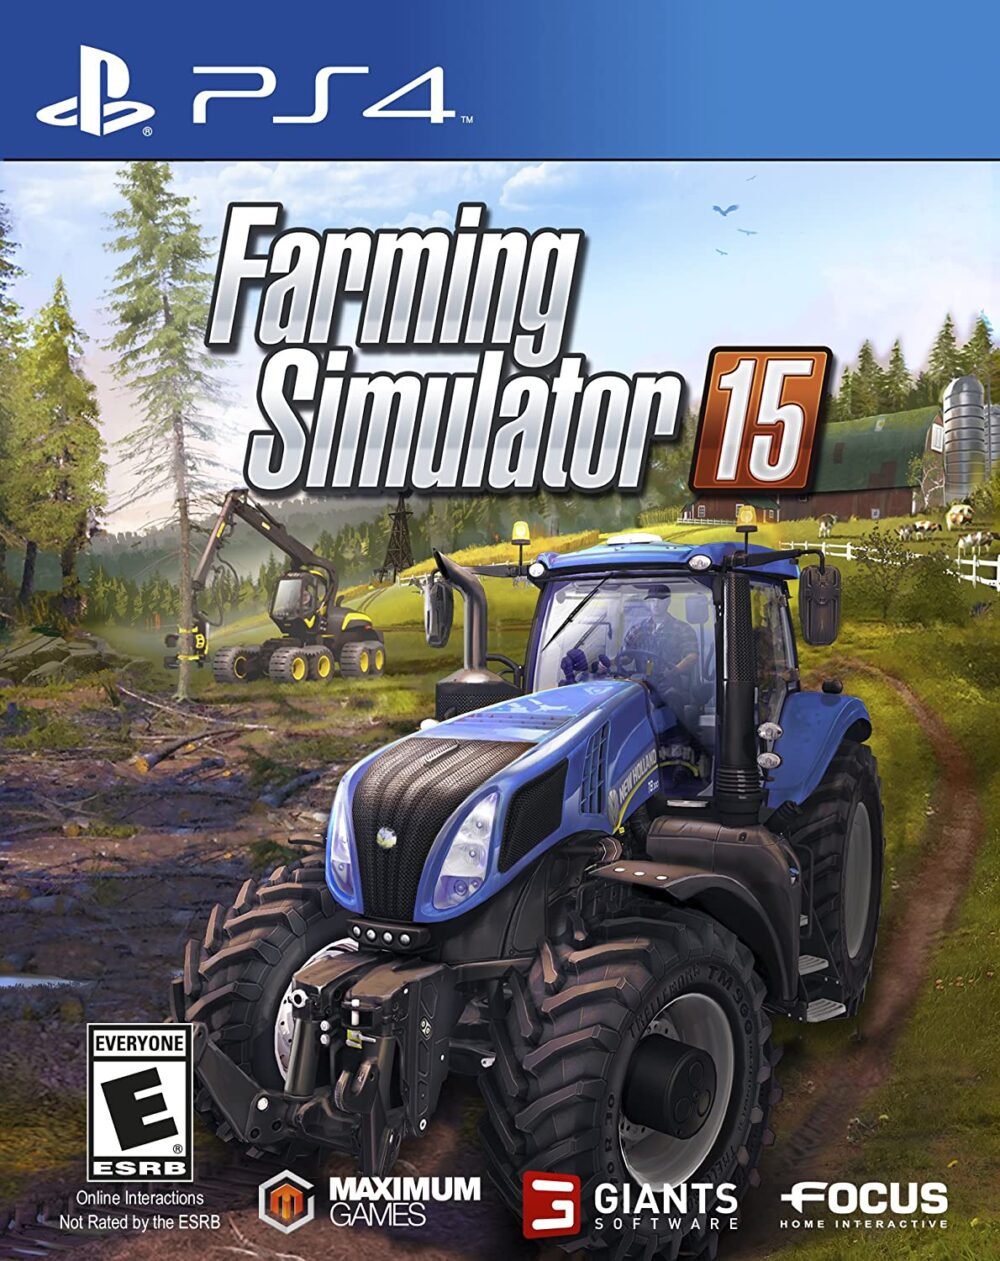 Farming Simulator 15 for PS4